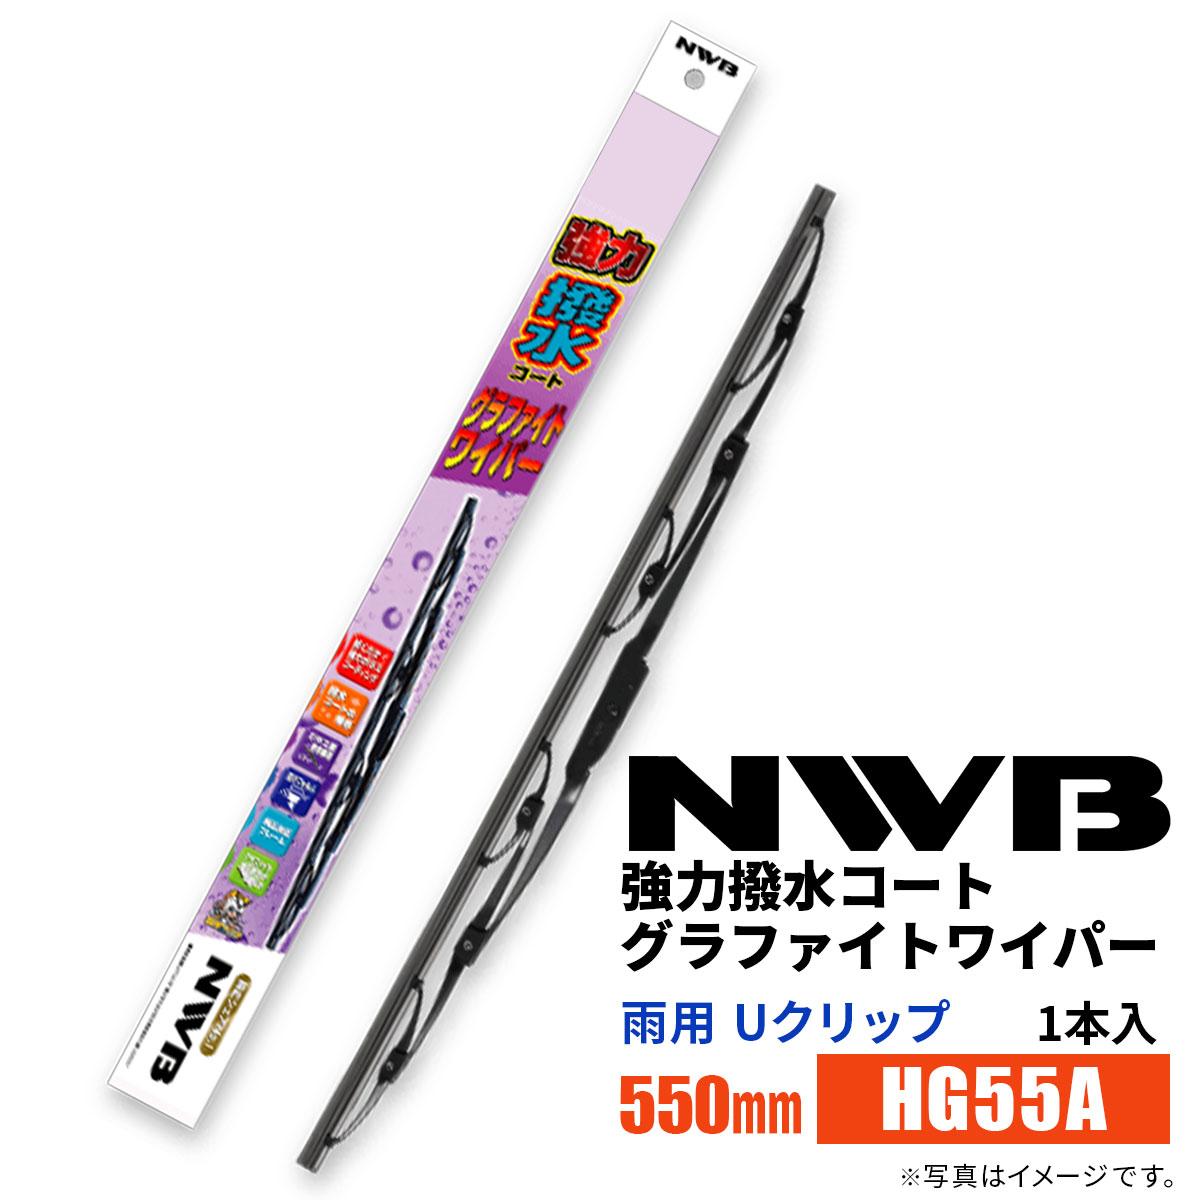 NWB 強力撥水コートグラファイトワイパー HG55A 550mm 1本入 雨用ワイパー Uクリップ